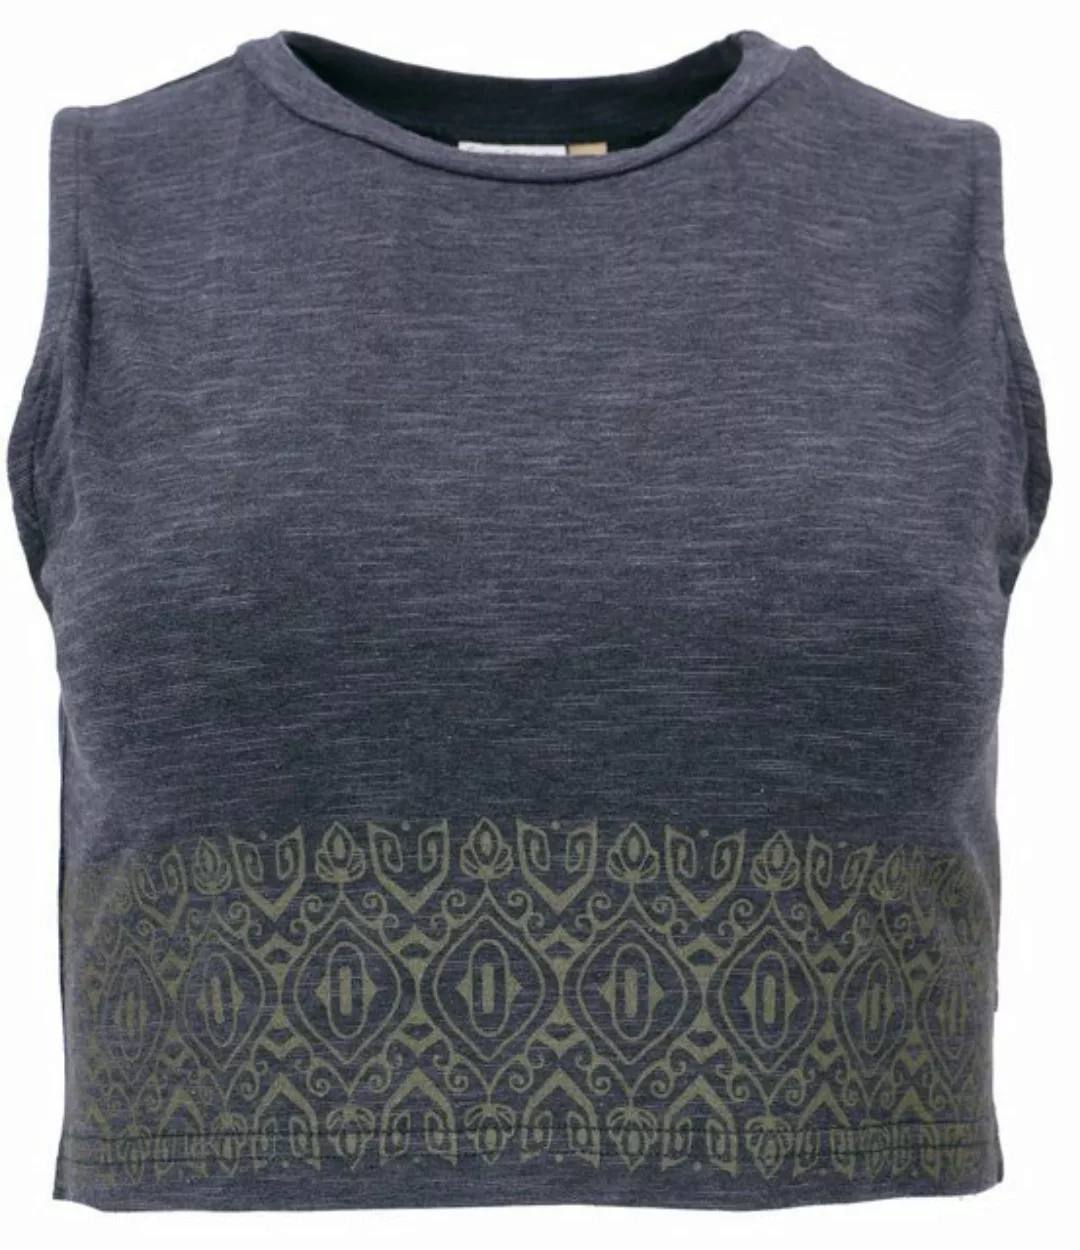 Guru-Shop T-Shirt Kurzes Top, bedrucktes Yoga Top, Yogatop aus.. Ethno Styl günstig online kaufen